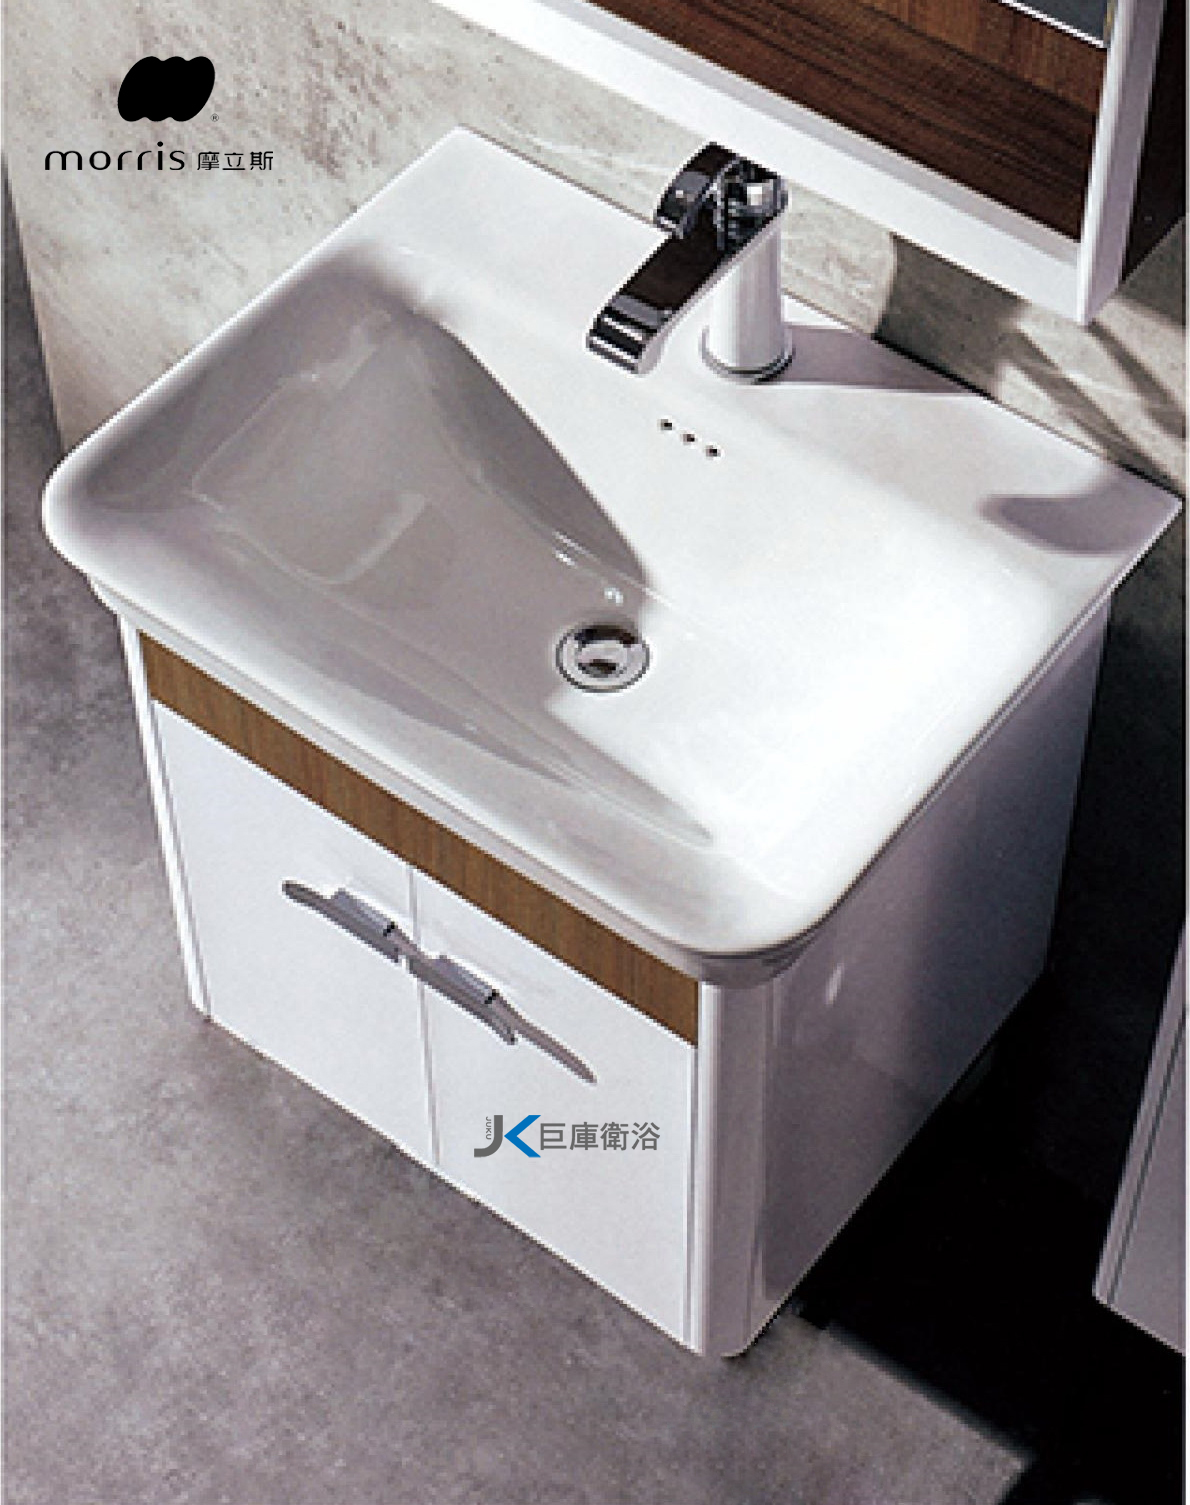 Morris摩立斯 MW-S9600 60CM不鏽鋼浴室櫃